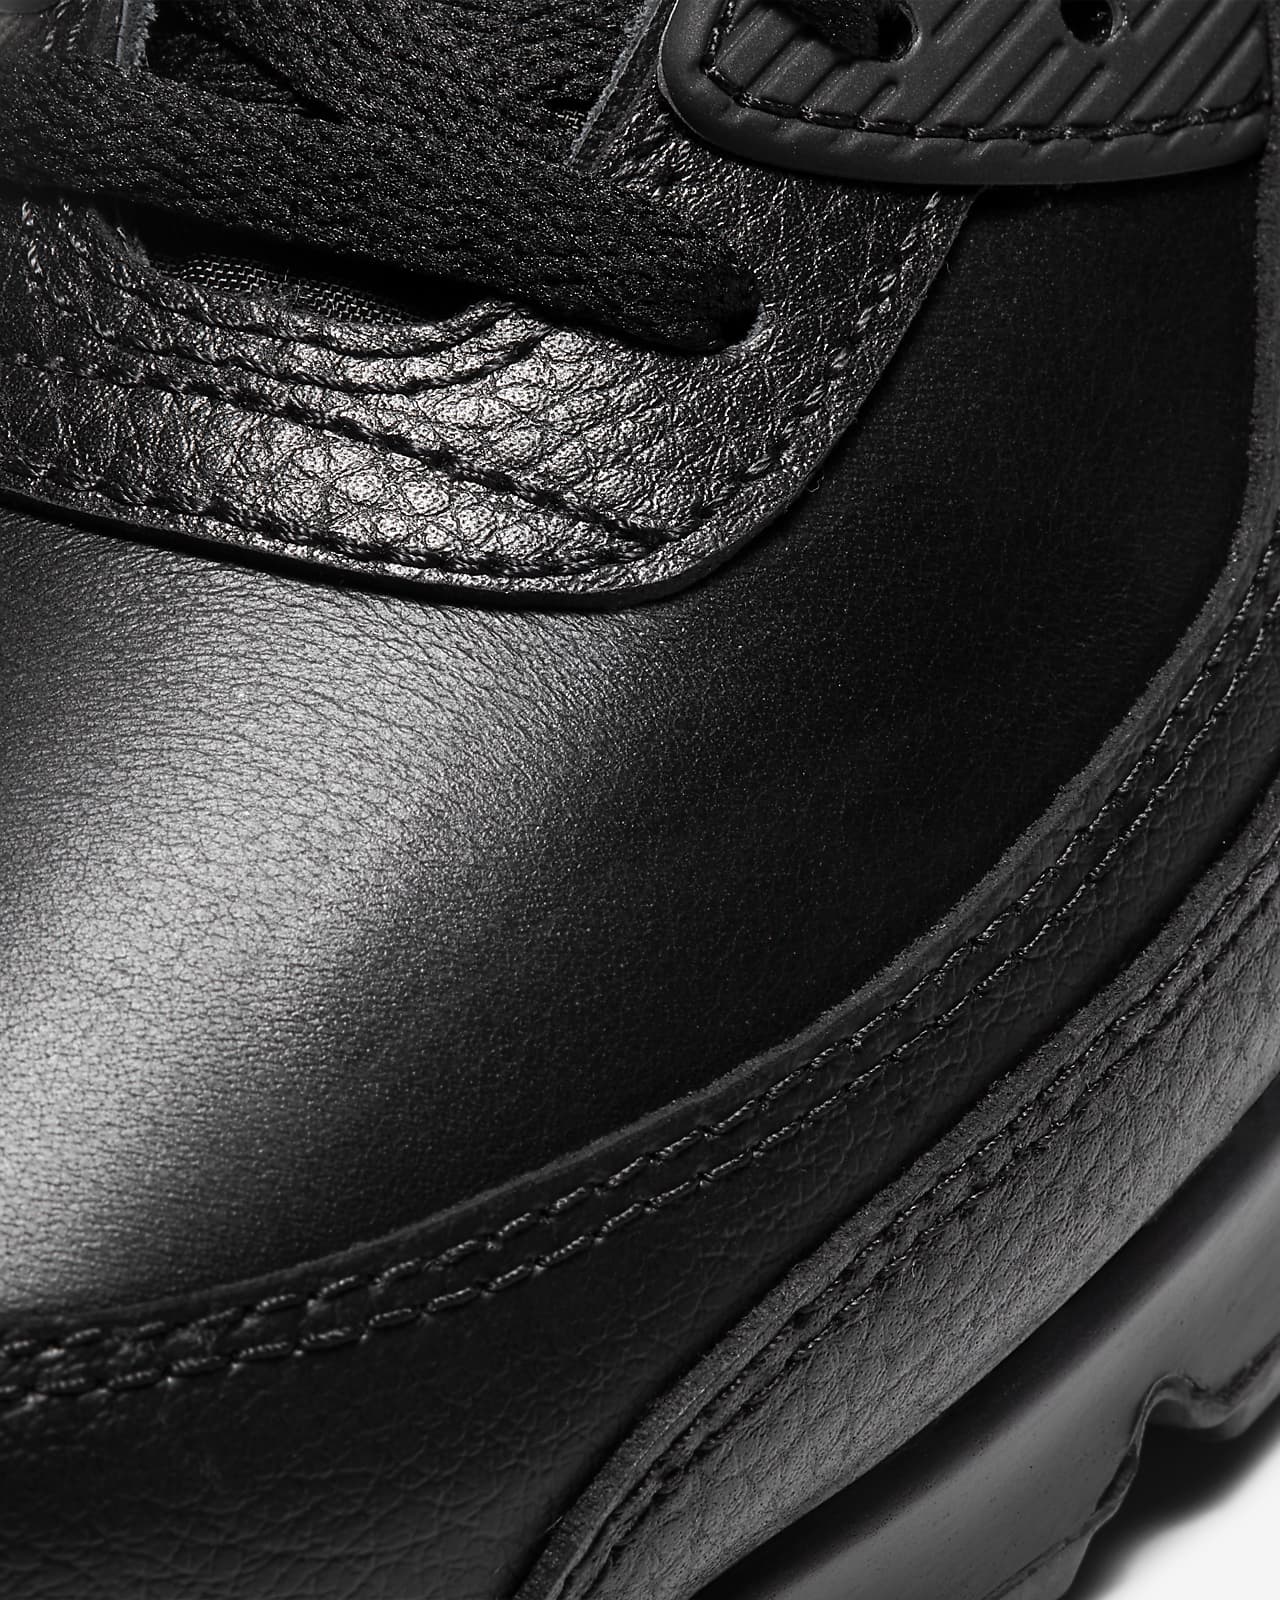 air max leather 90 black